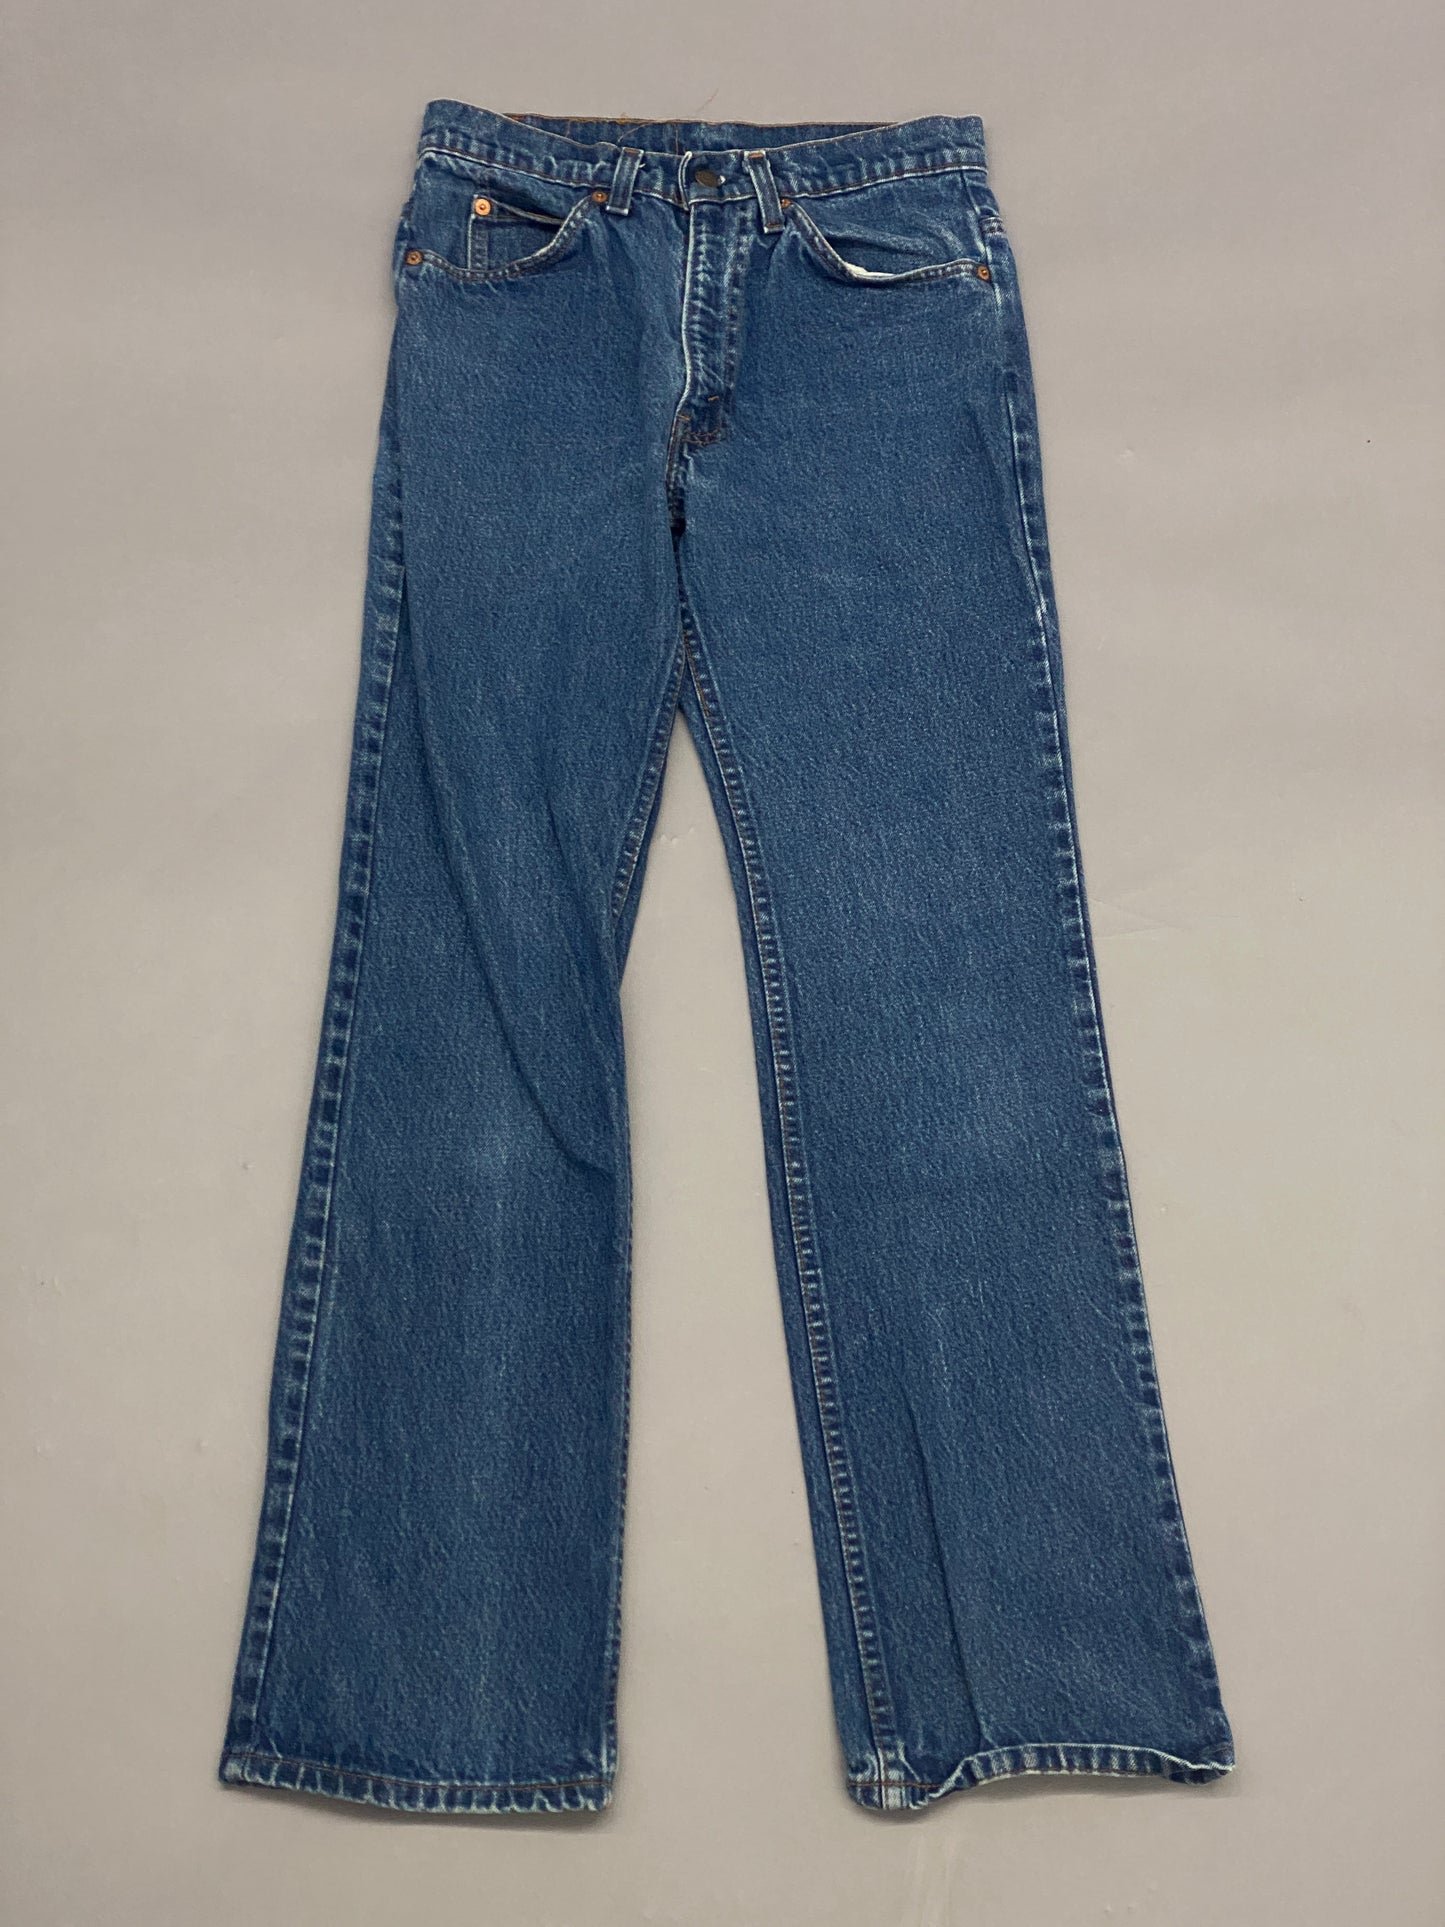 Jeans Levis Orange Tab Vintage - 30 x 31